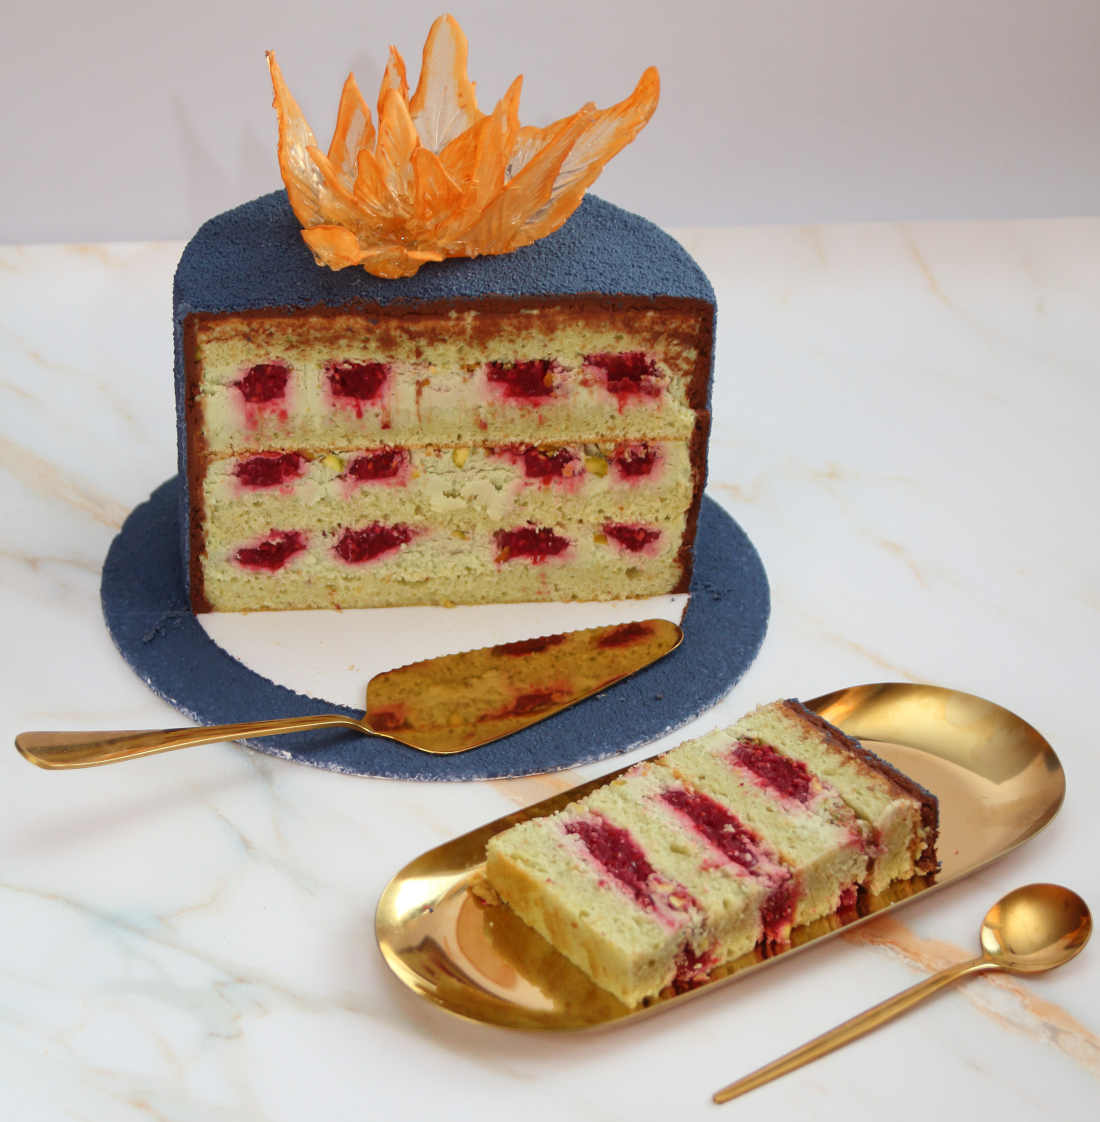 Isomalt flower cake with pistachio and raspberry filling